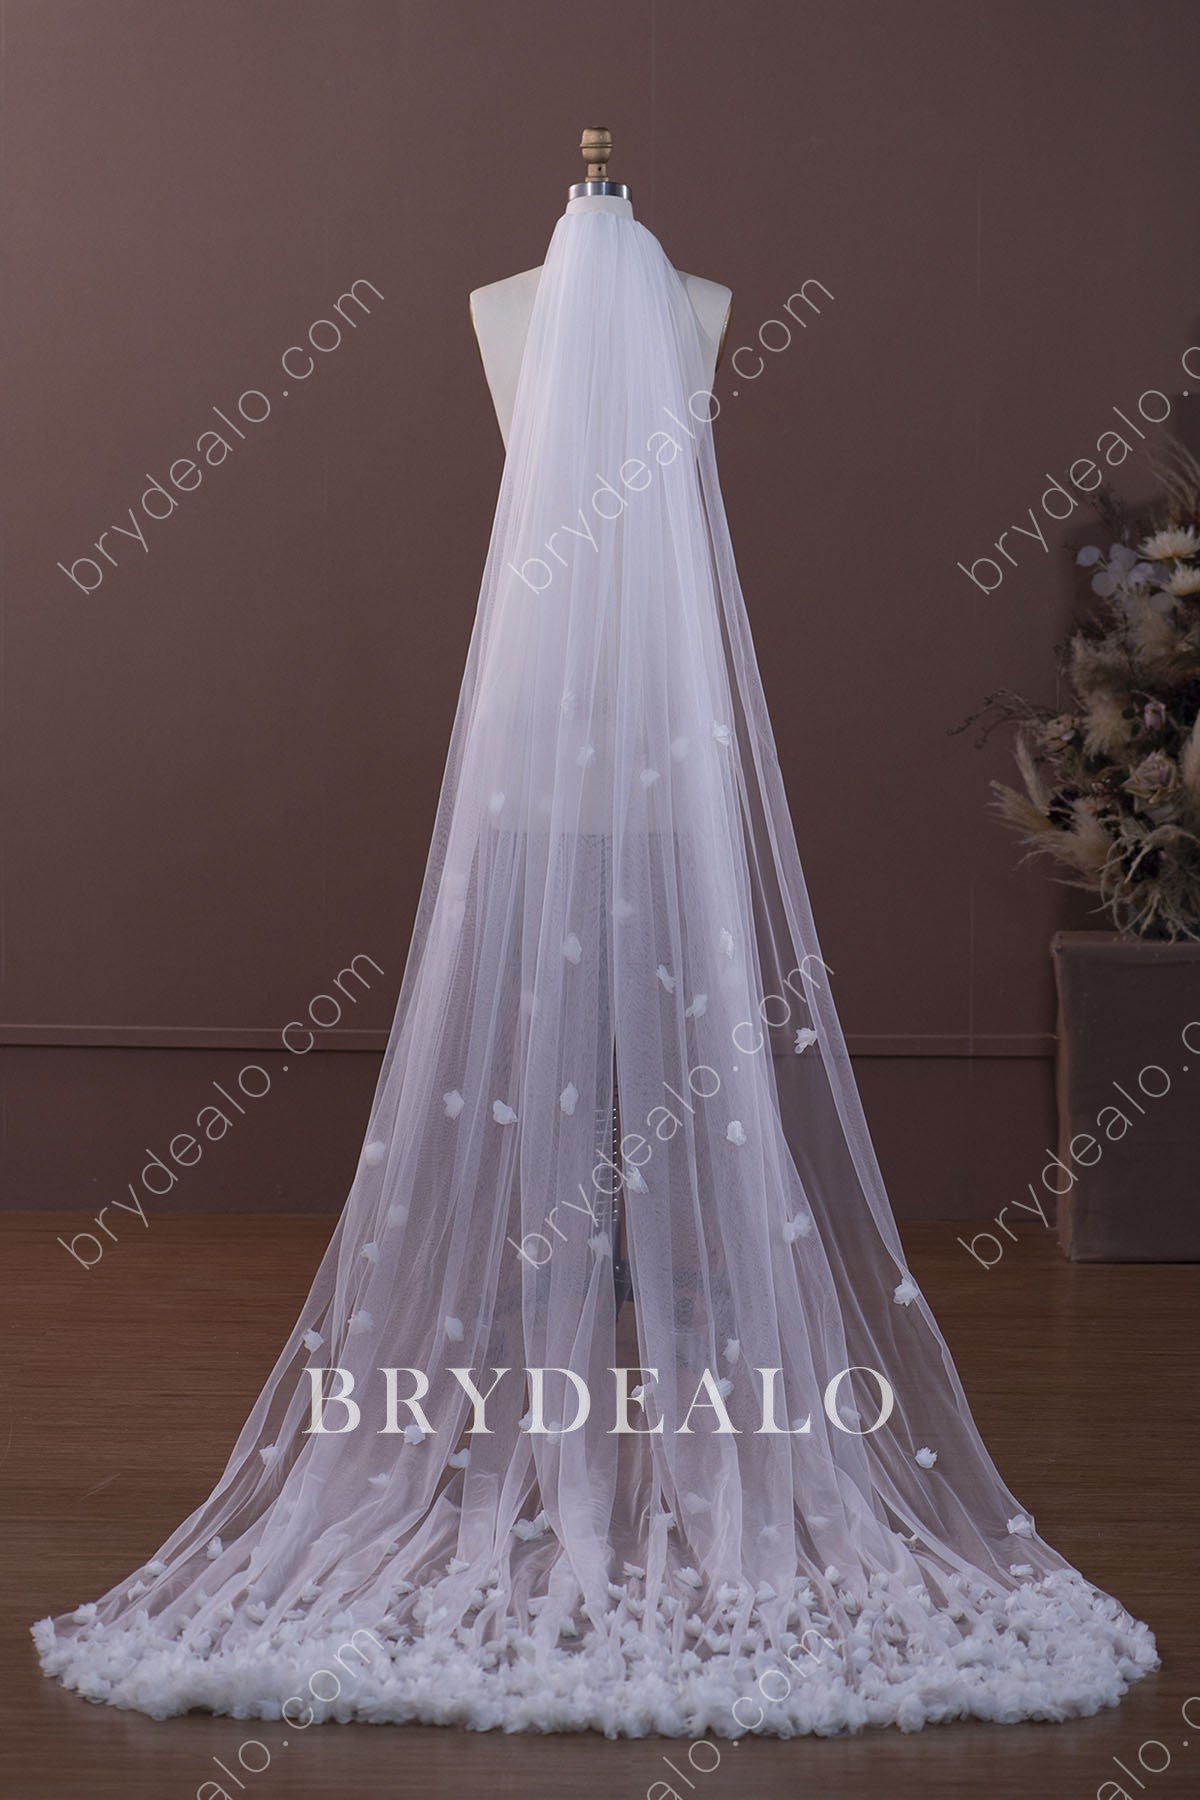 https://cdn.shopify.com/s/files/1/0558/7599/3647/products/dreamlike-3D-flowers-chapel-length-wedding-veil.jpg?v=1644142468&width=1200